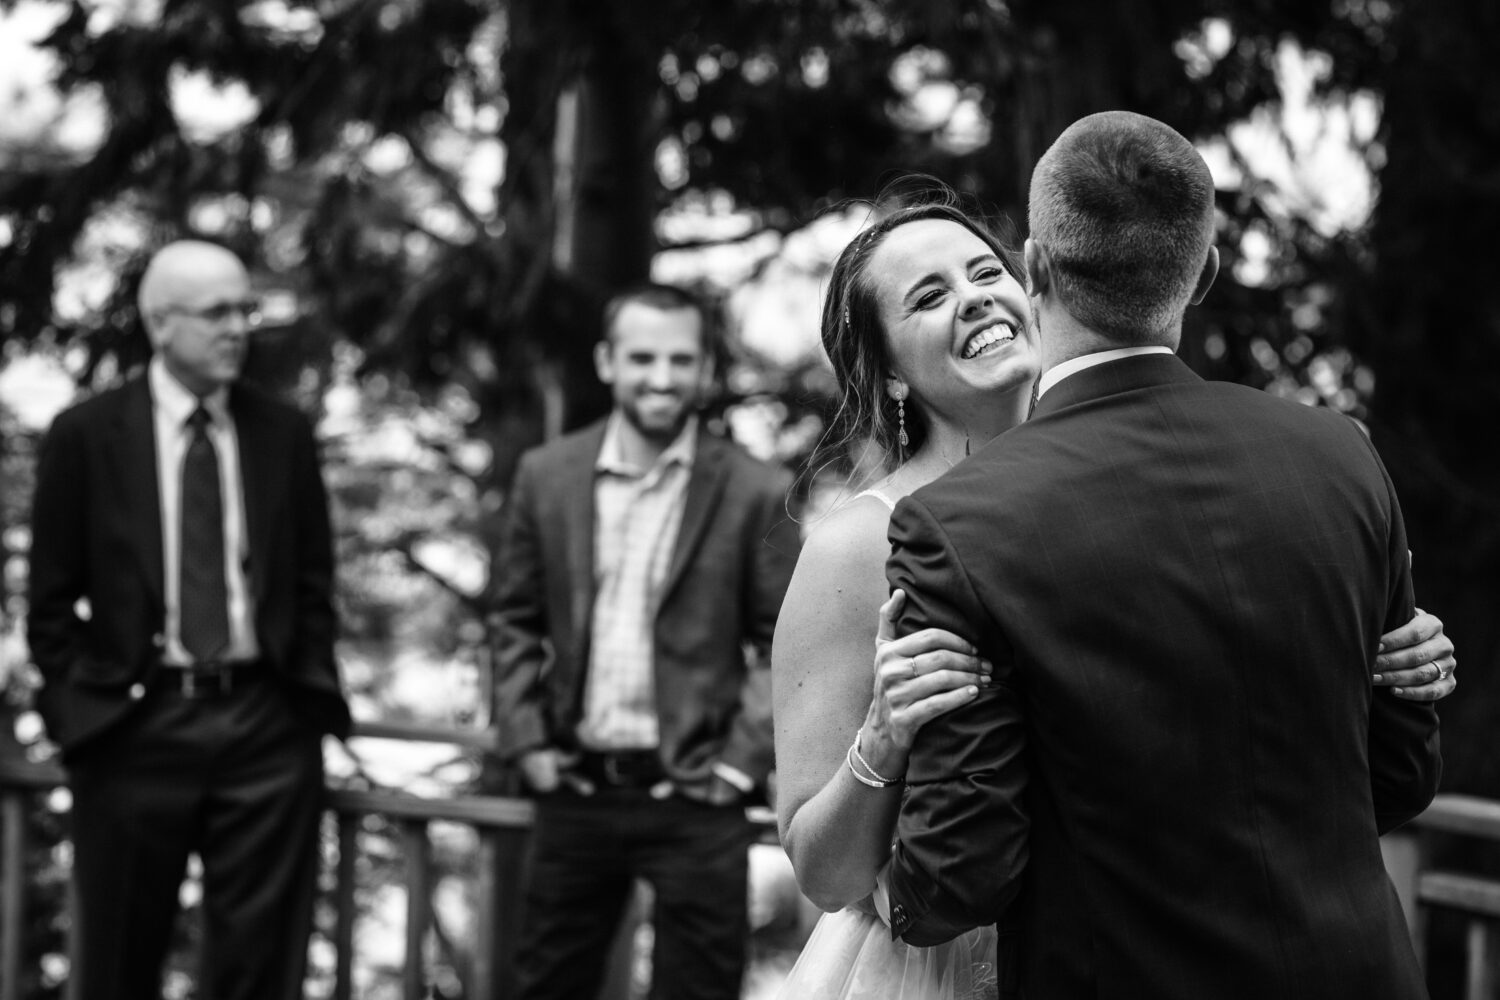 A joyful couple during their first dance at a backyard wedding reception.